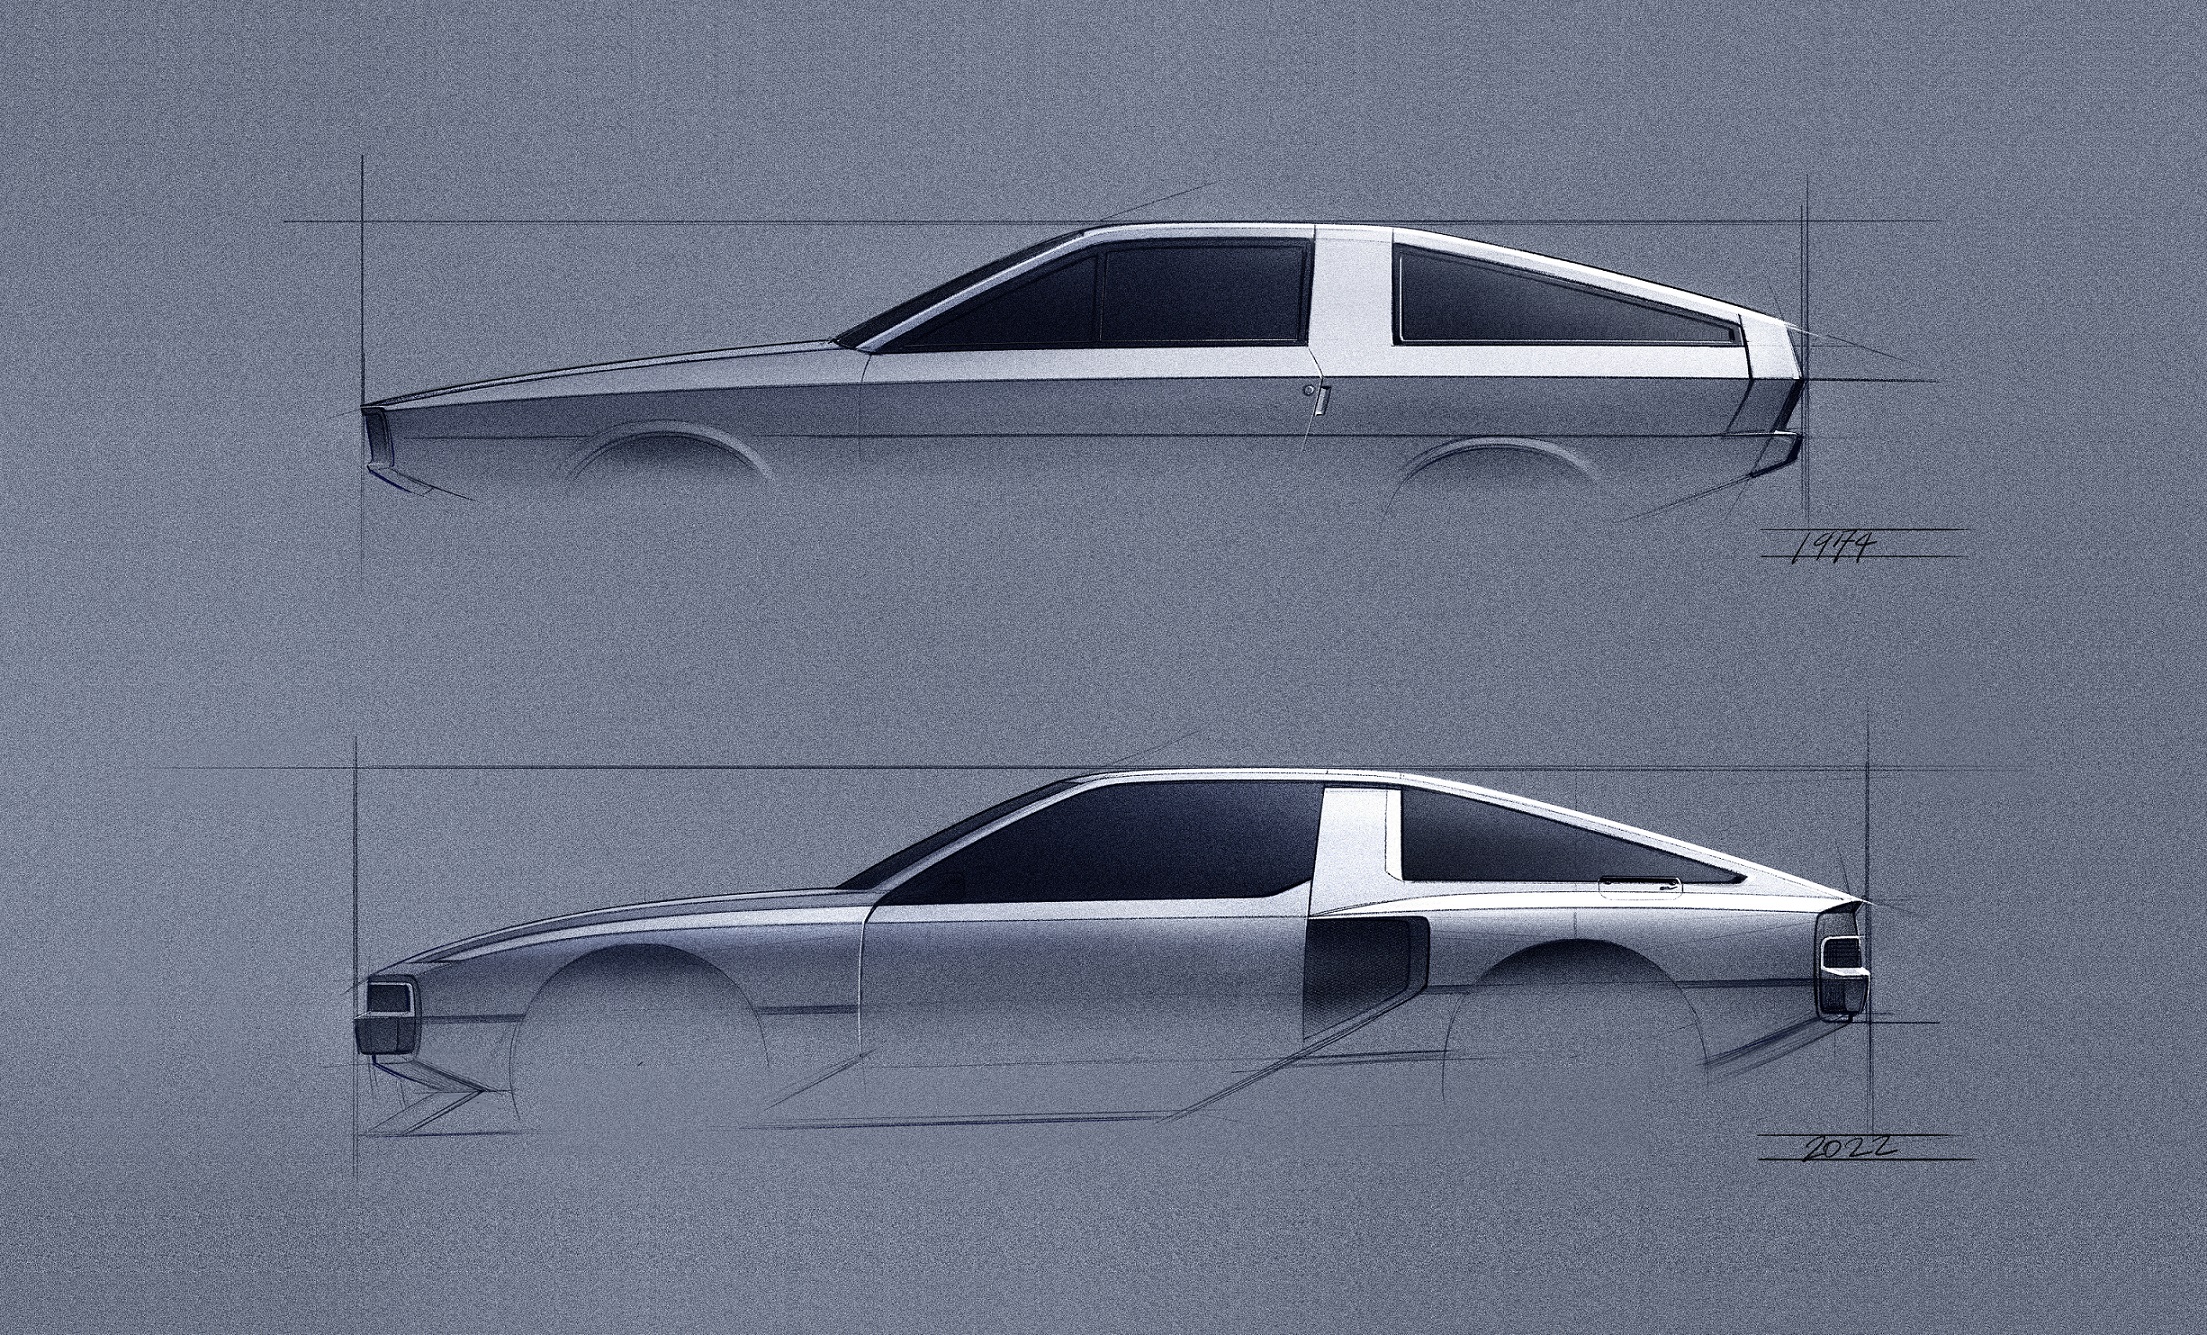 Hyundai Pony Coupe Concept and Hyundai N Vision 74 sketch